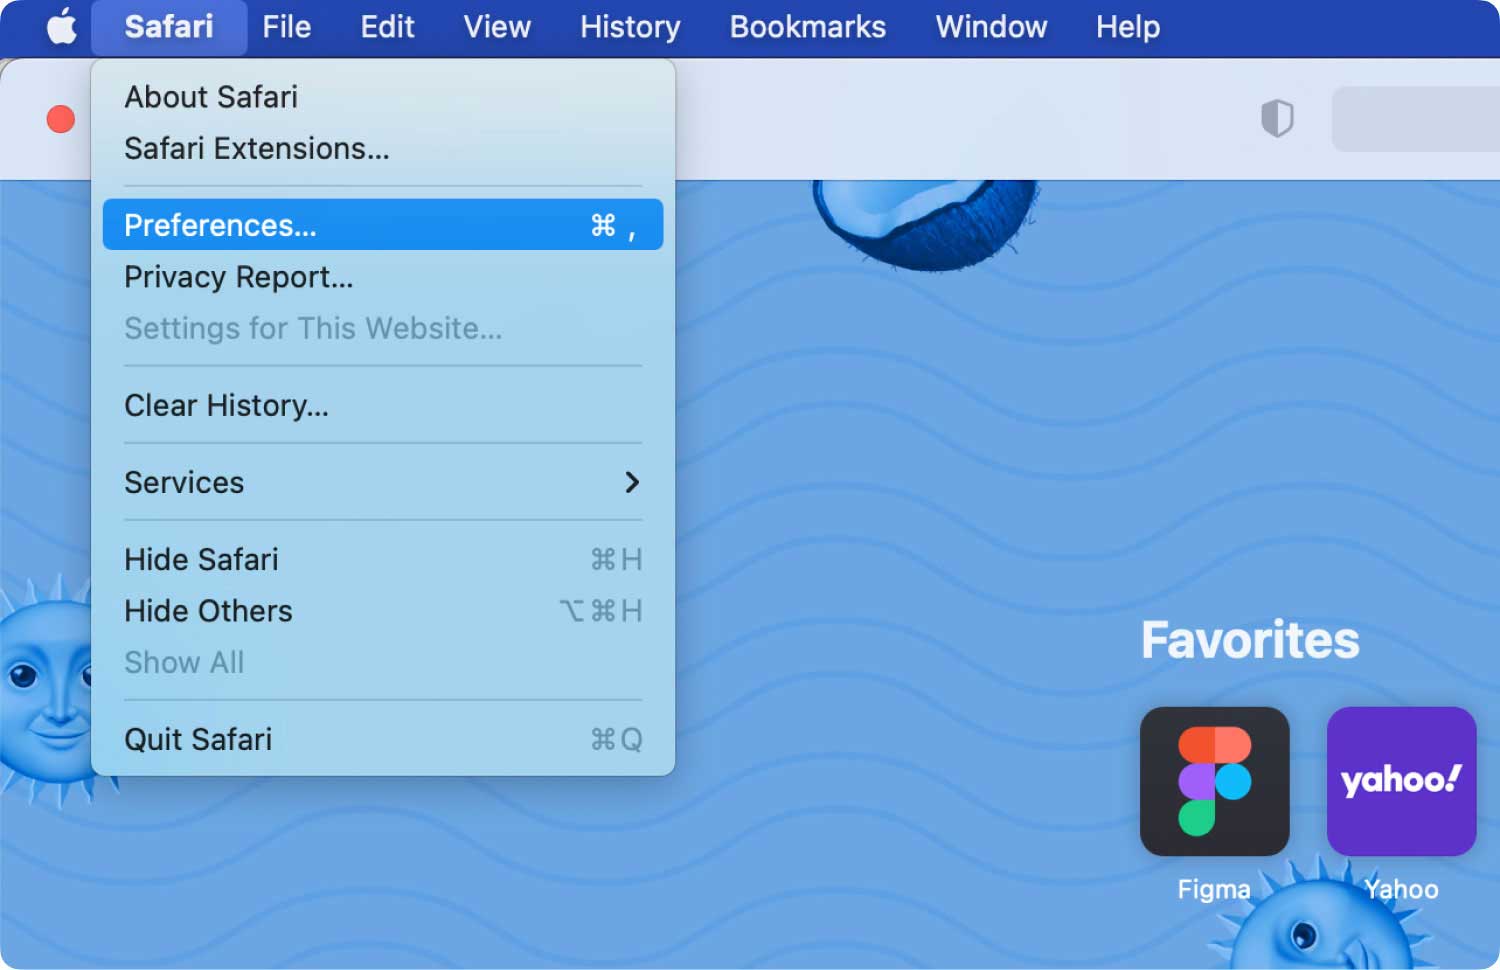 Sta pop-ups toe op Mac Safari